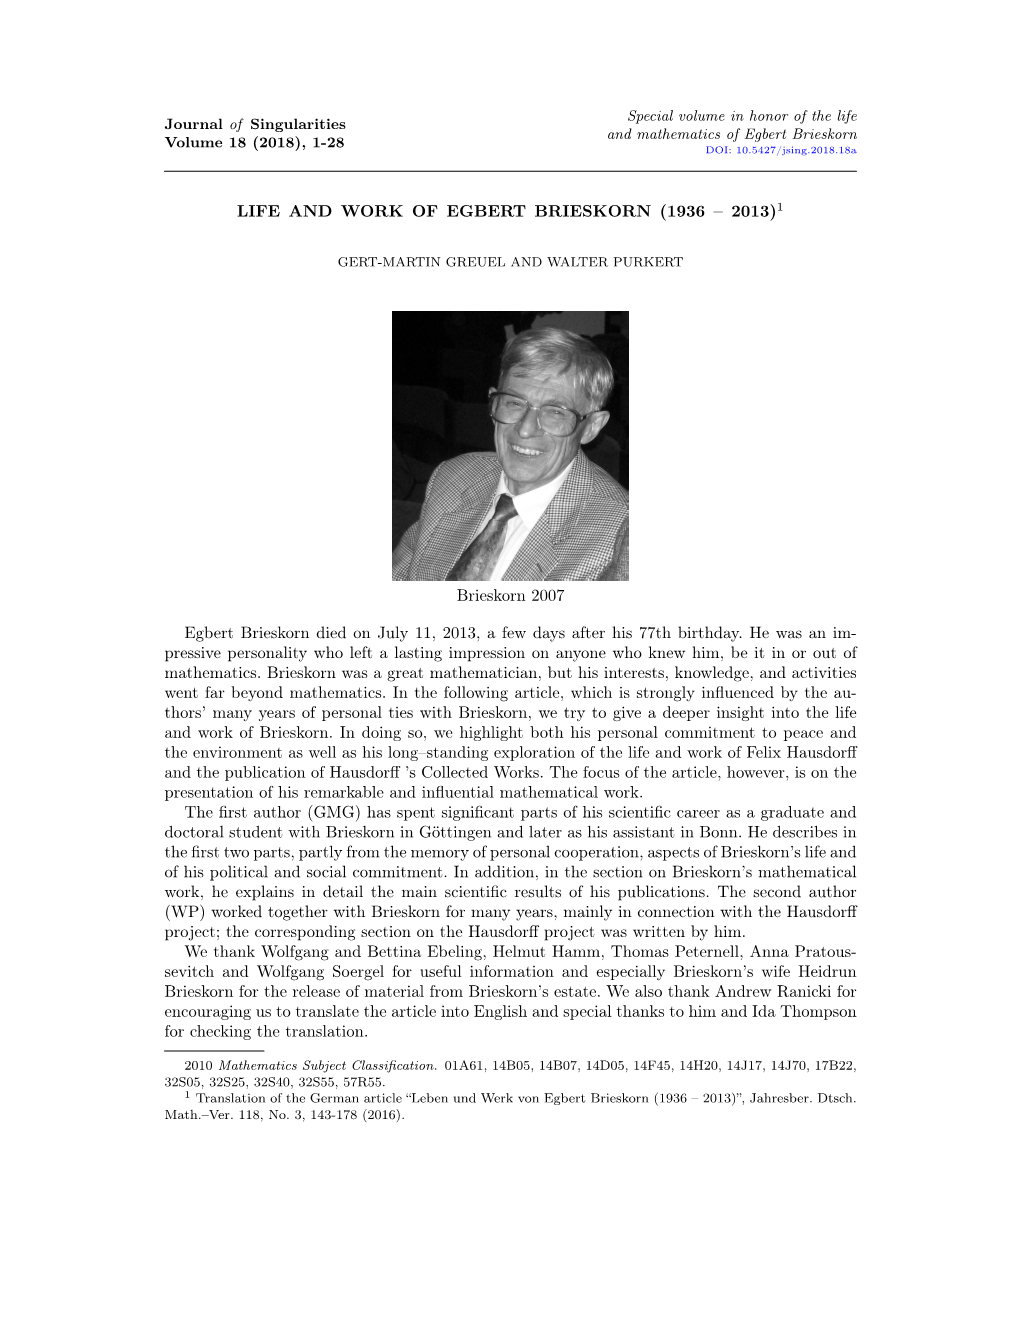 Life and Work of Egbert Brieskorn (1936 – 2013)1